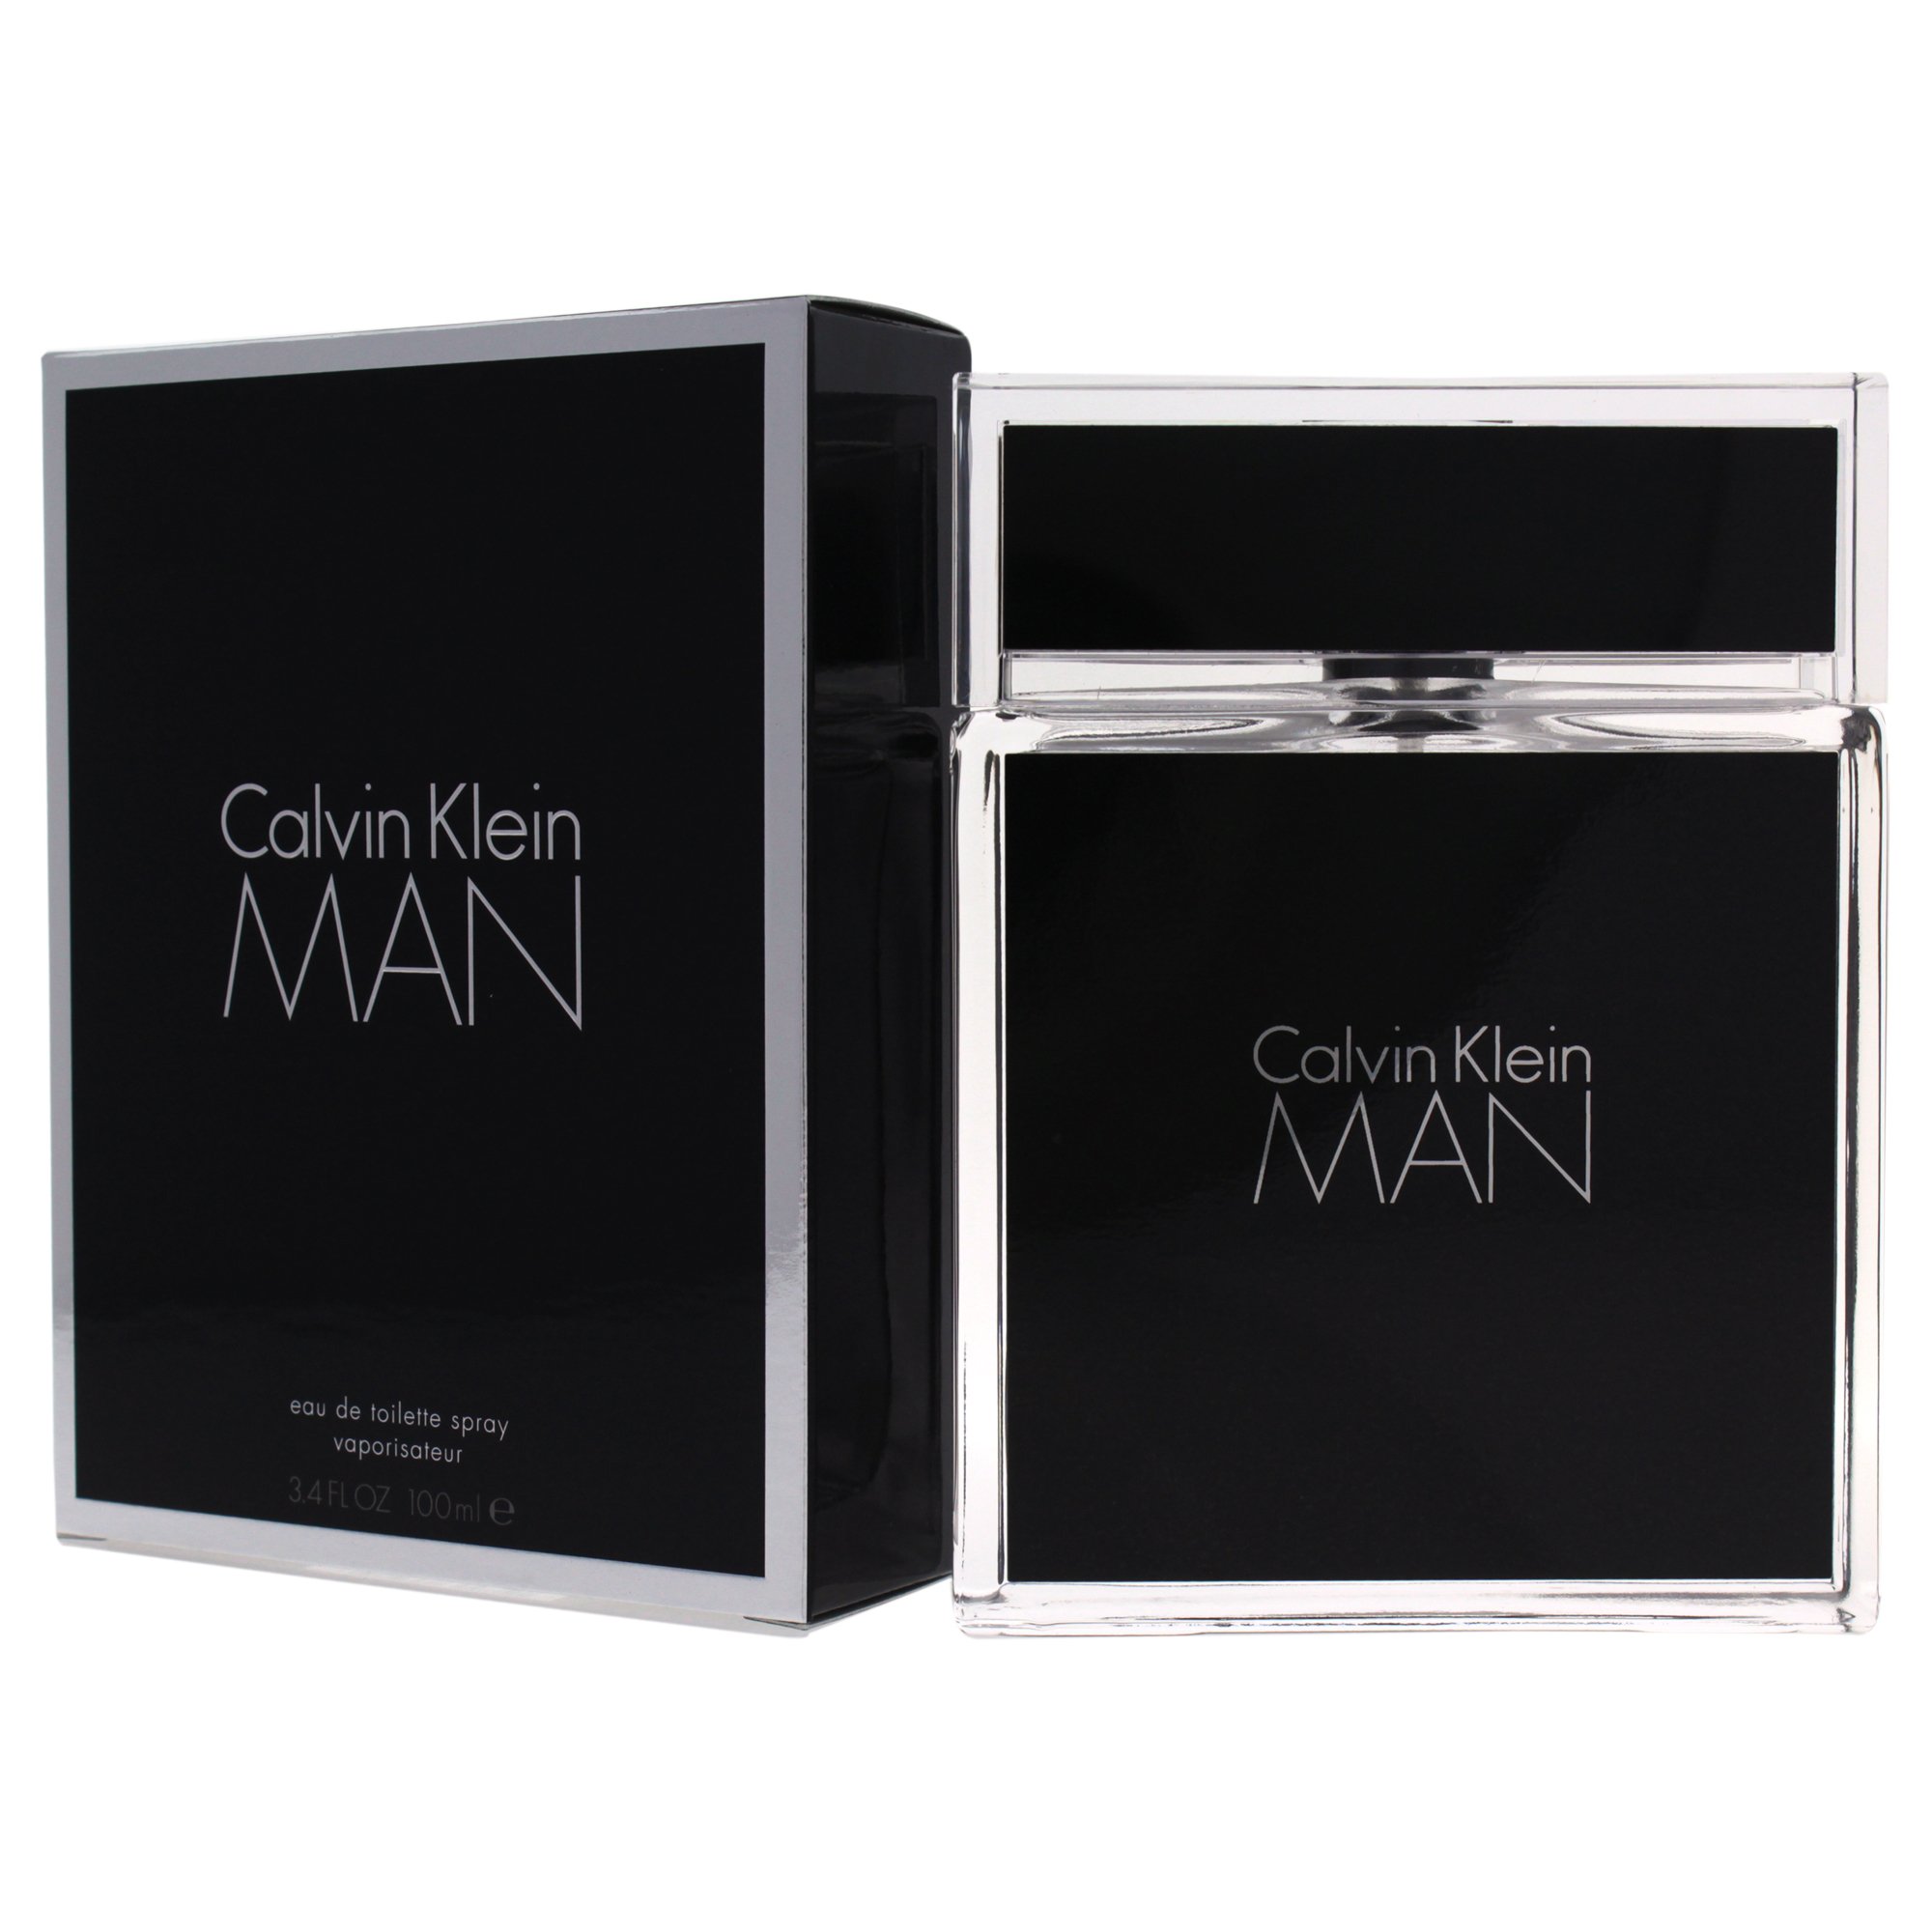 CK Man by Calvin Klein 3.4 oz 100 ml Eau de Toilette Spray | eBay